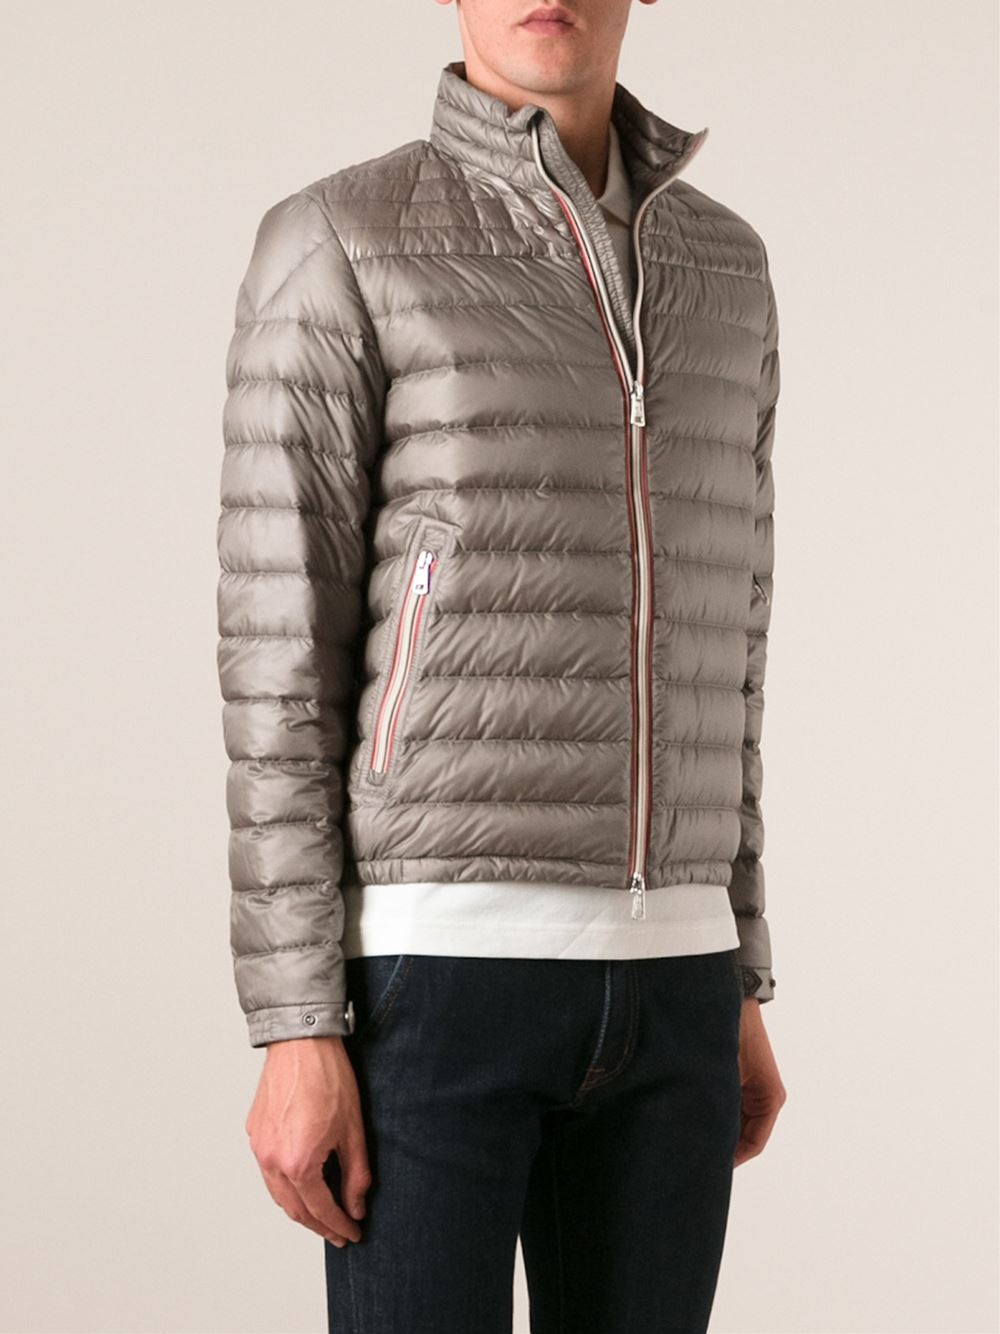 Moncler 'Daniel' Padded Jacket in Grey (Gray) for Men - Lyst